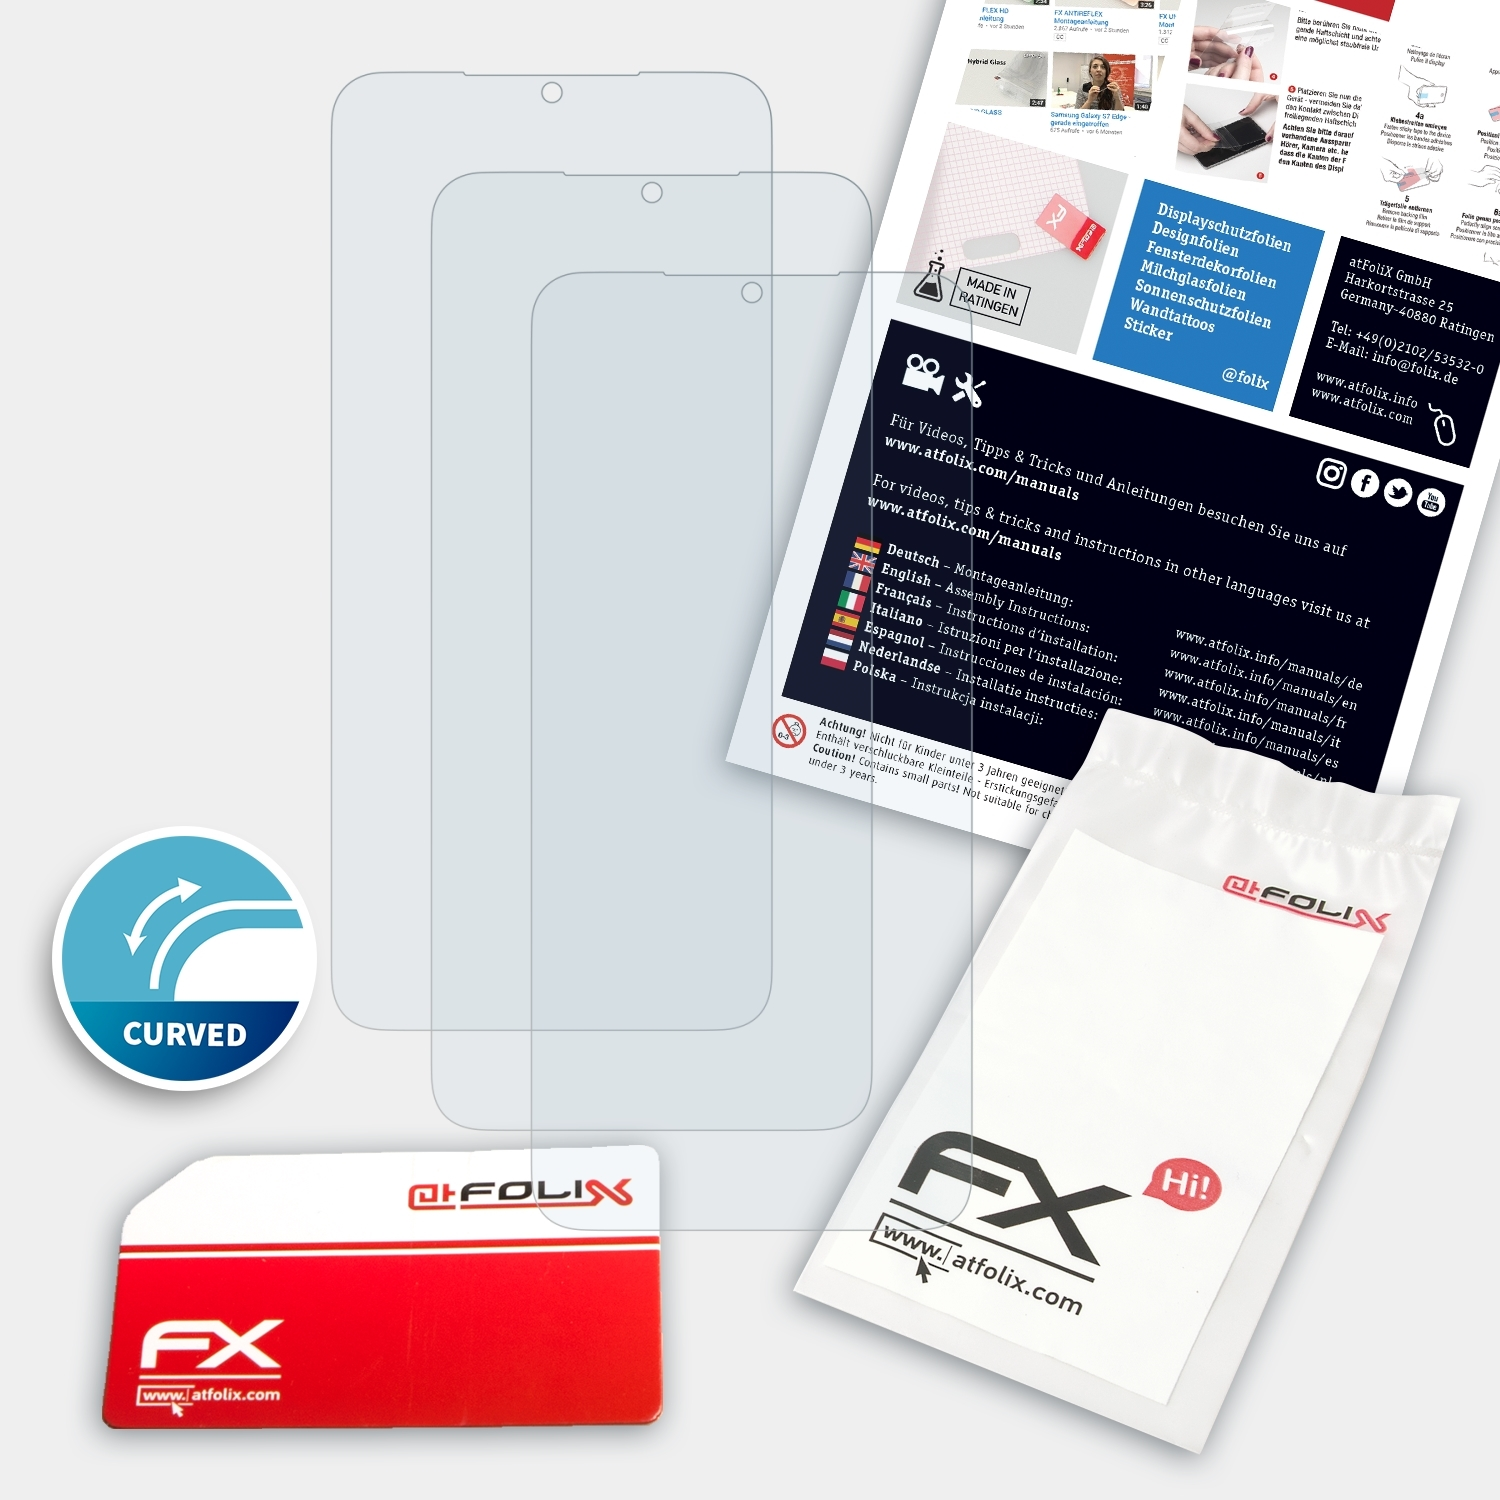 Displayschutz(für Xiaomi 3x Poco FX-ActiFleX M3) ATFOLIX